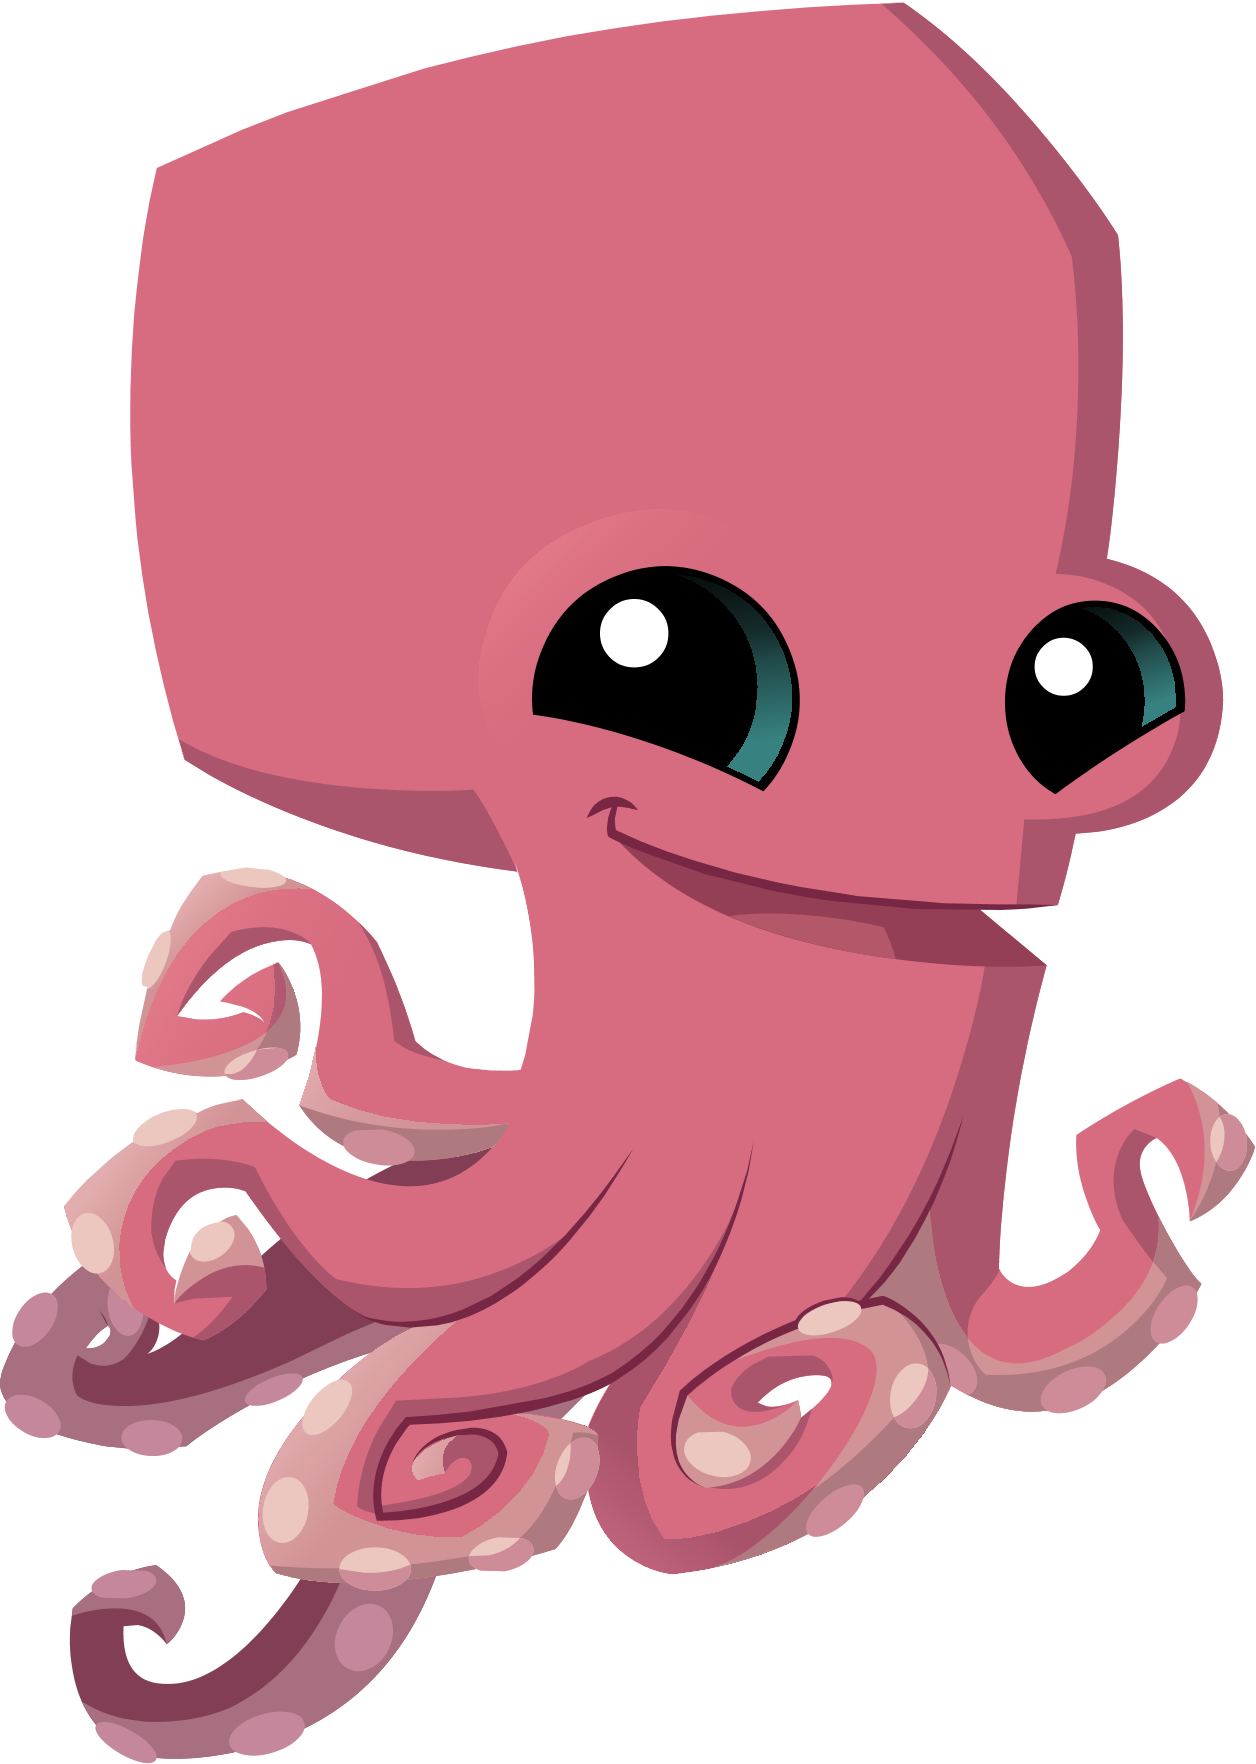 Download PNG image - Octopus Transparent Images PNG 